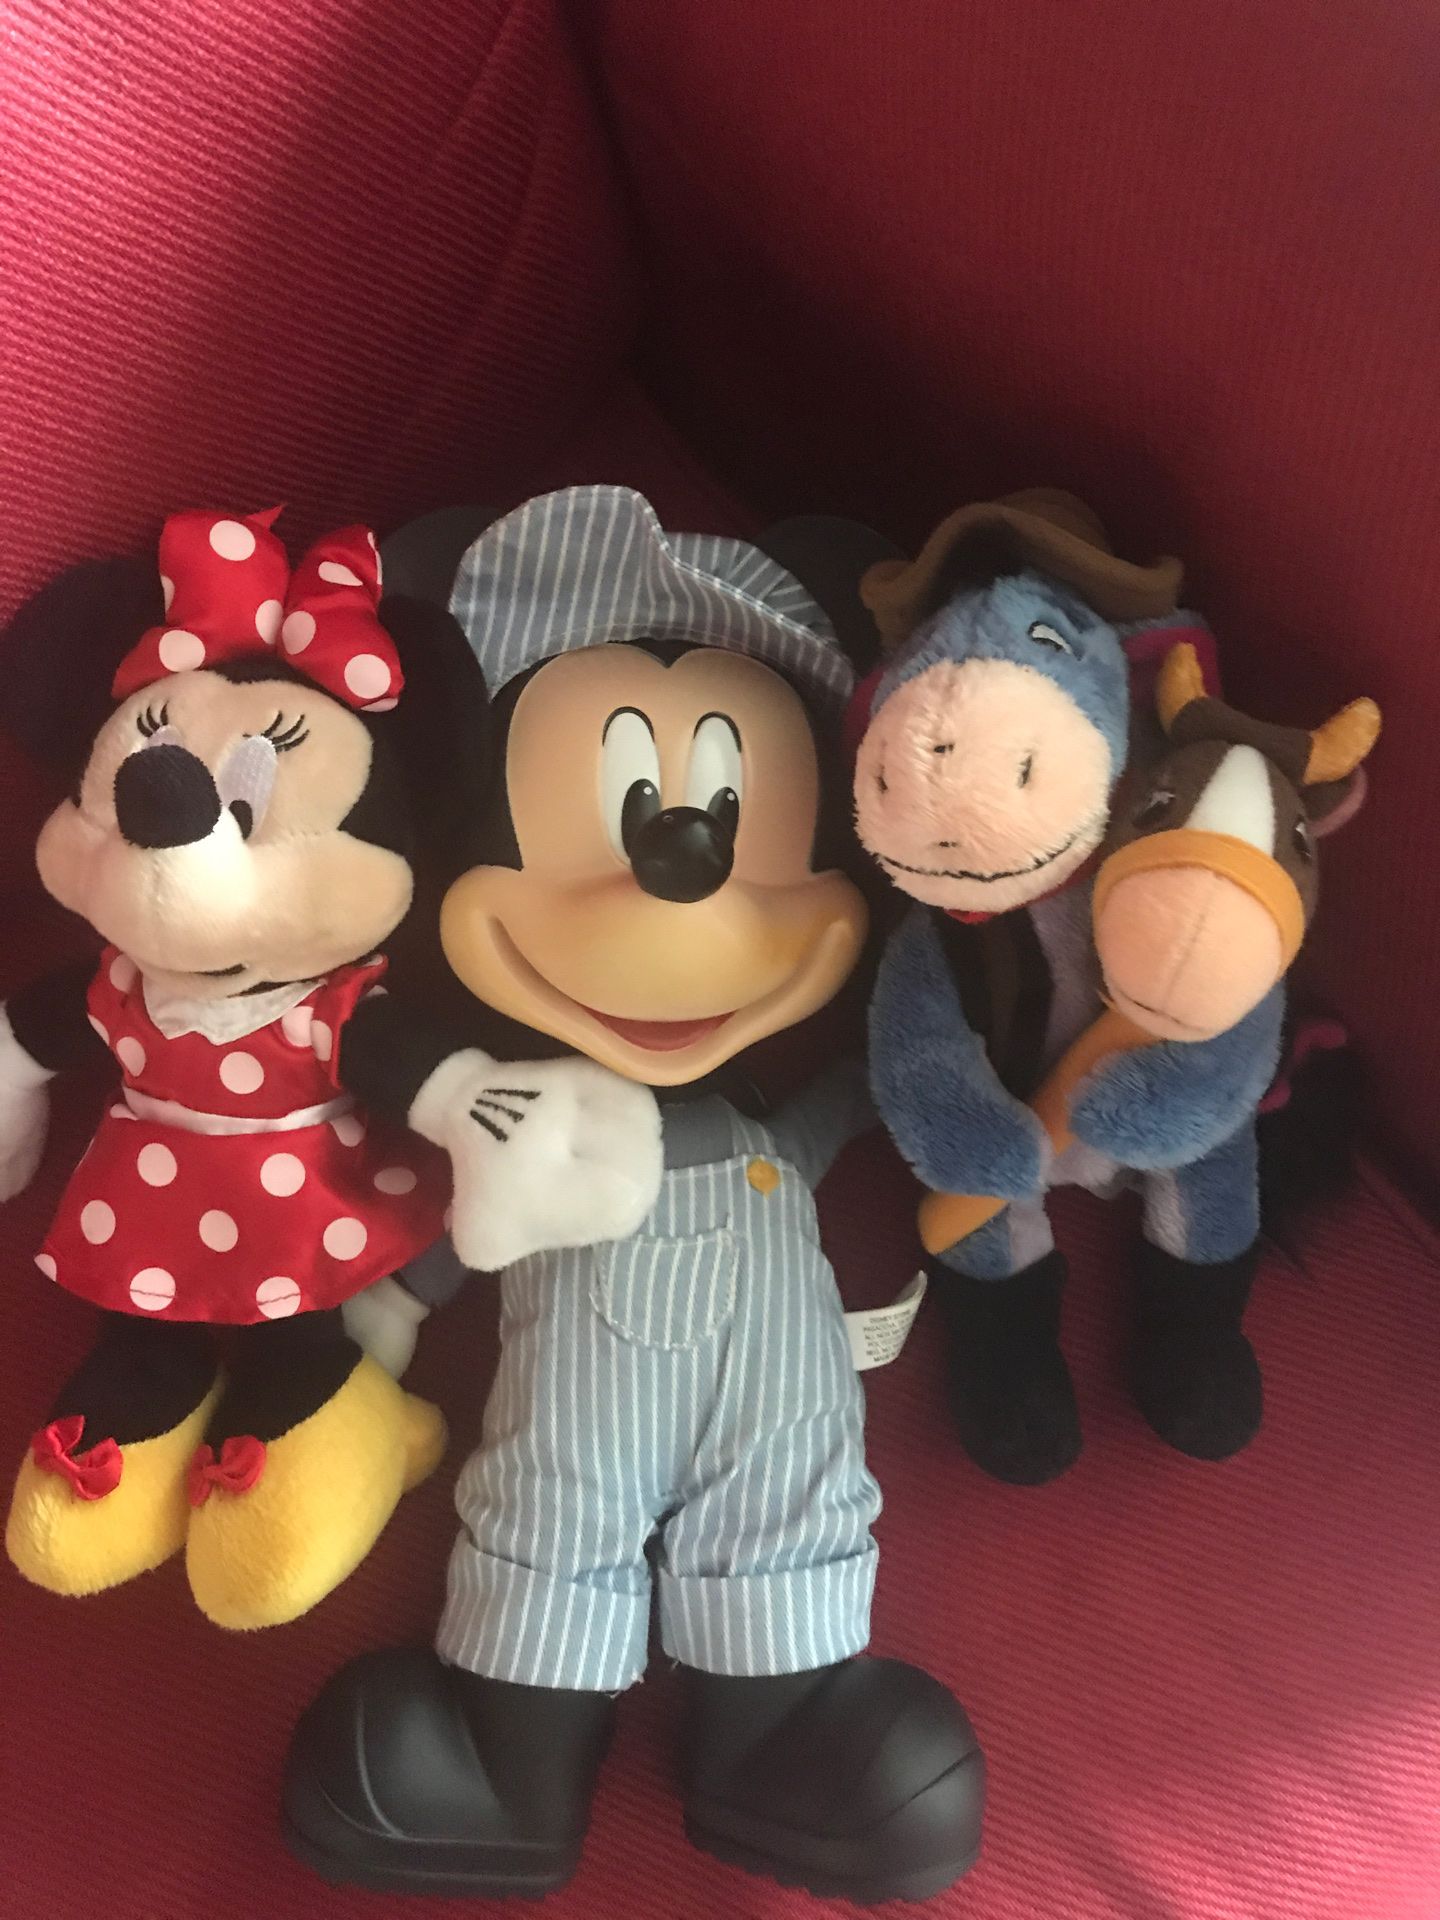 Disney plush toys including Mickey, Minnie, eeyore